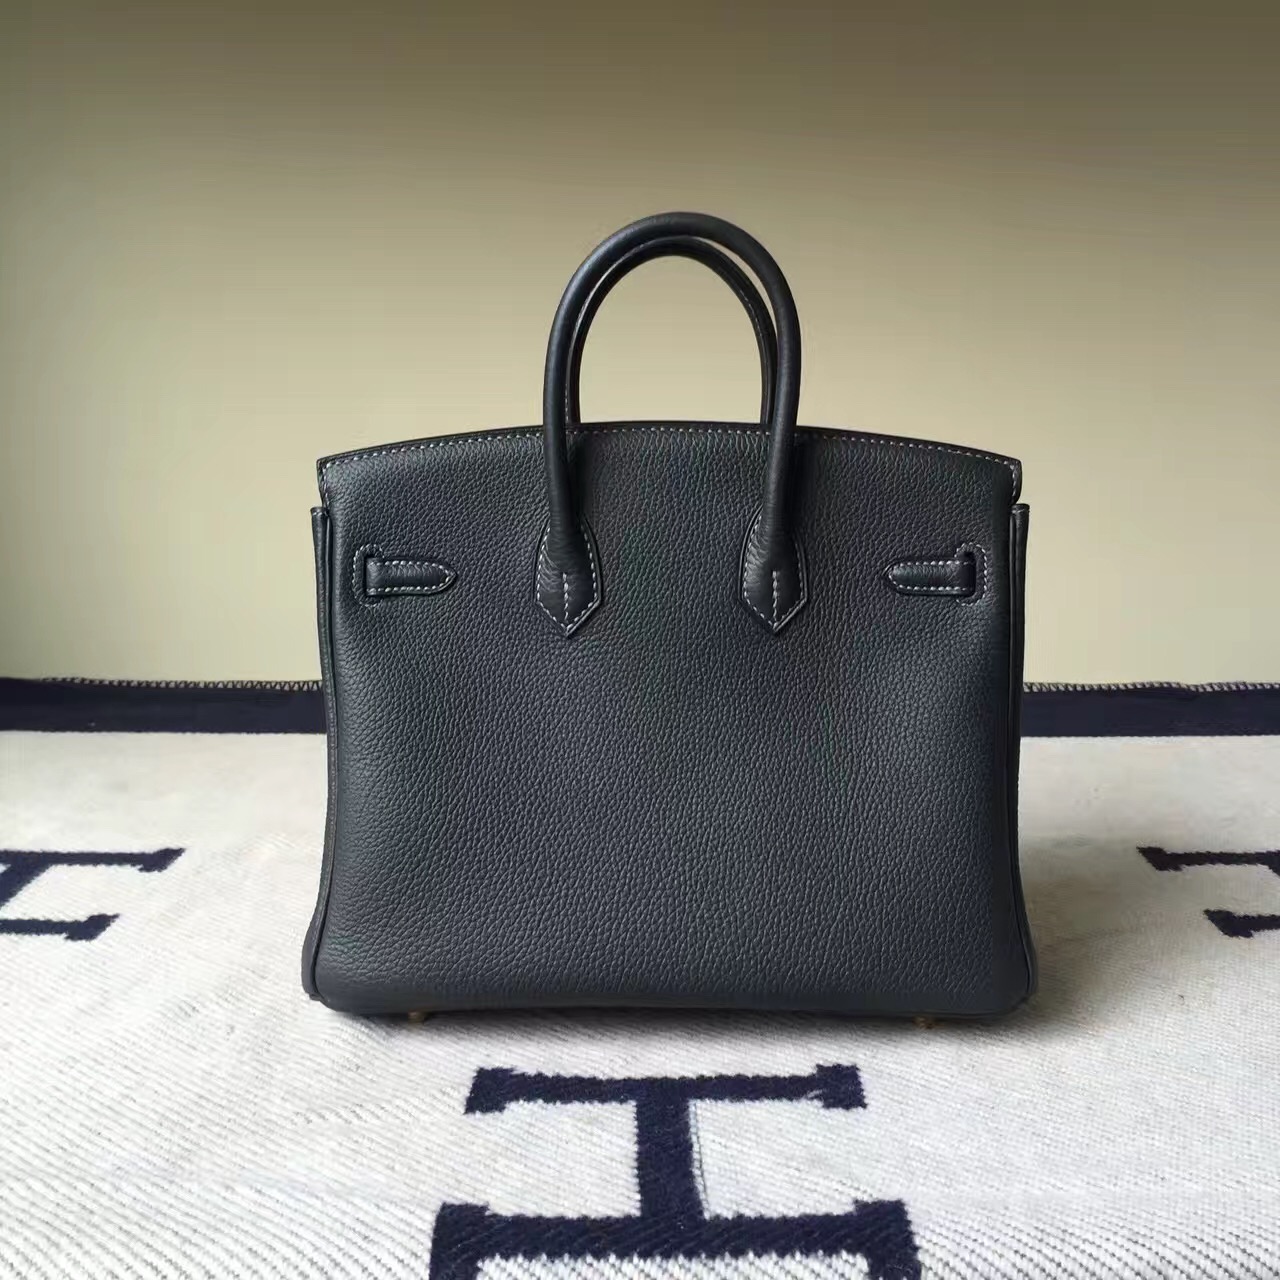 Wholesale Hermes Togo Leather Birkin25cm Bag in 33 Graphite Grey